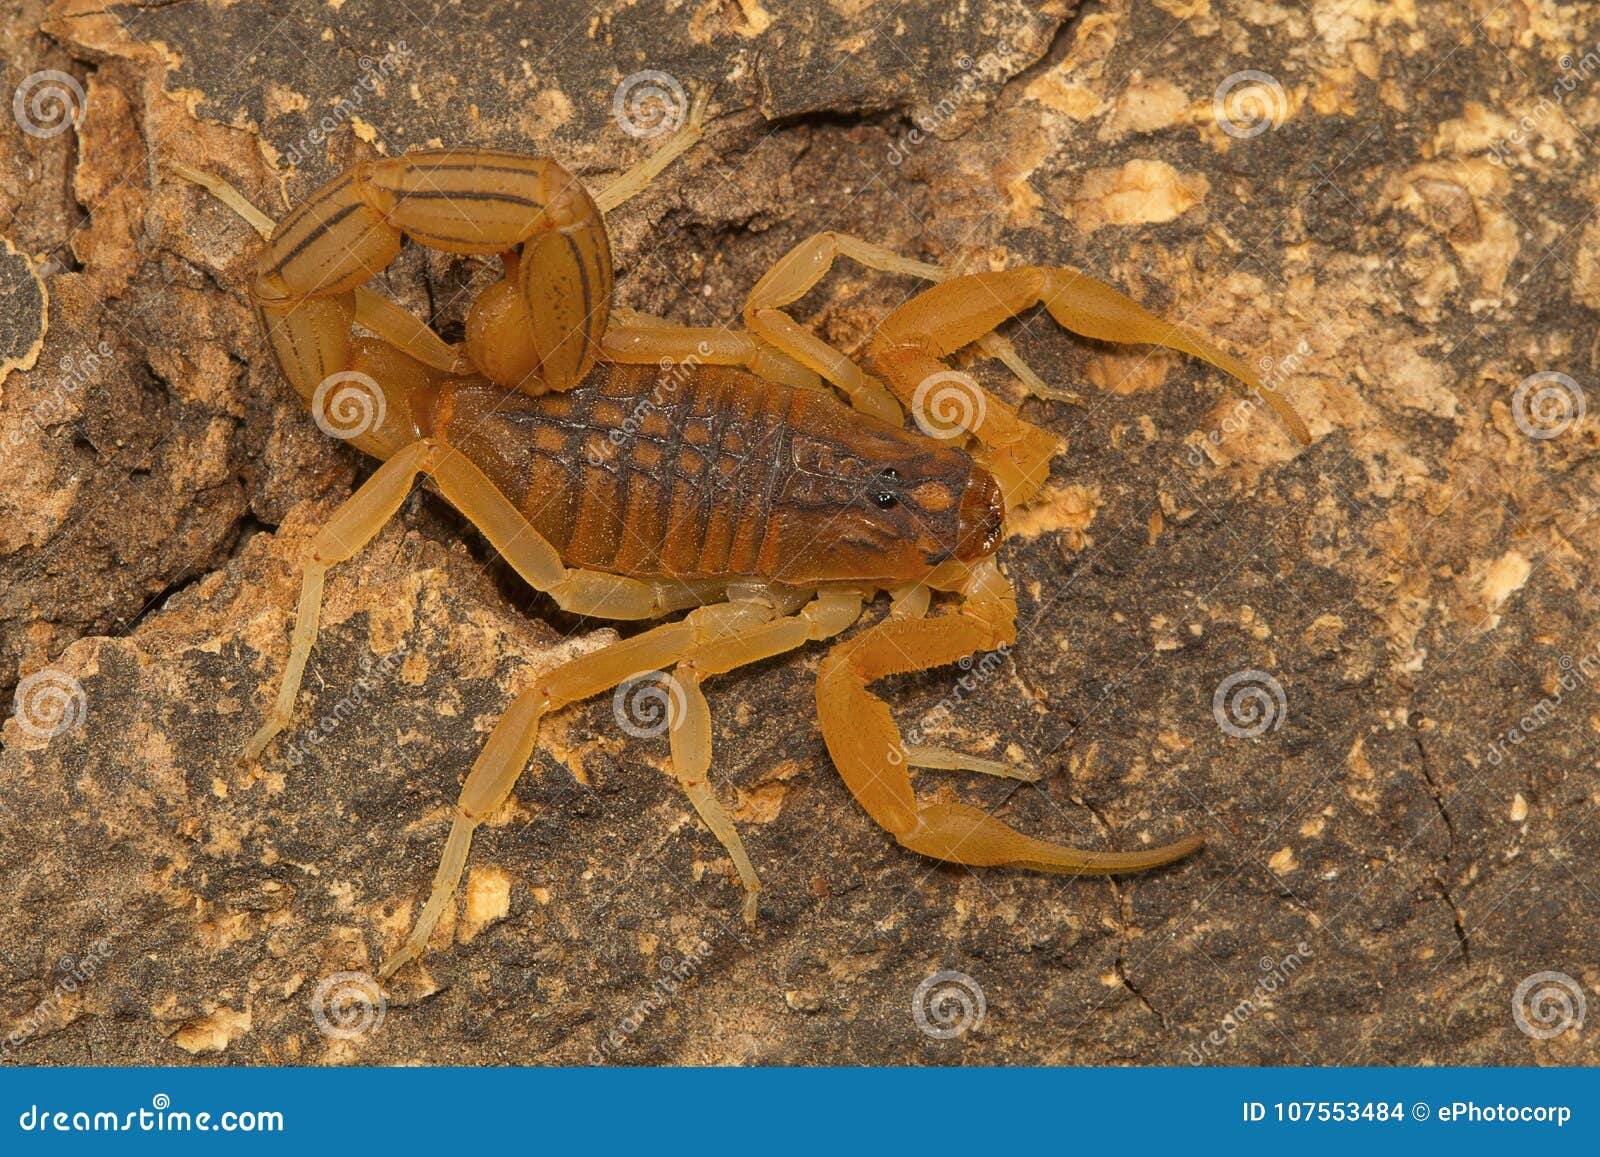 fat tailed scorpion hottentotta rugiscutis from type locality, chengalpettu